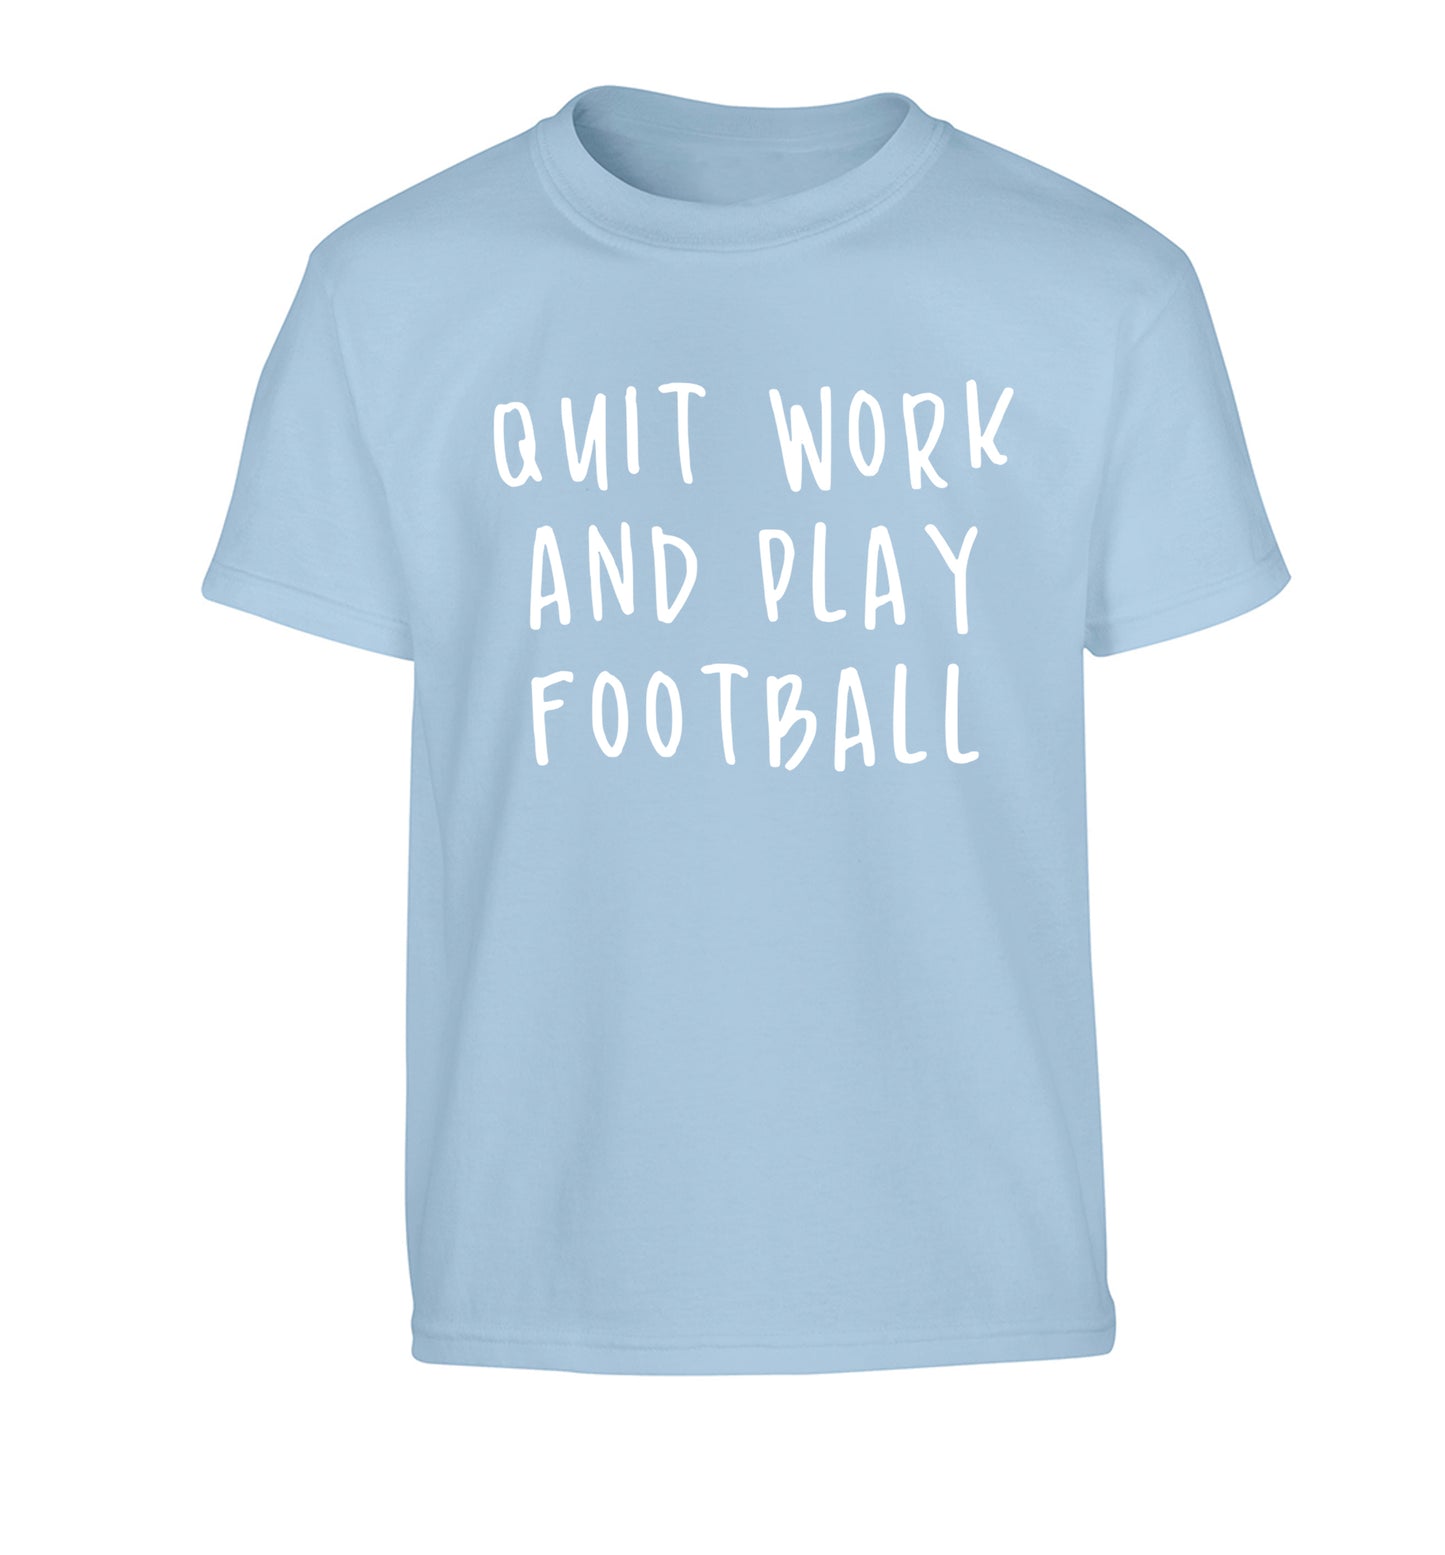 Quit work play football Children's light blue Tshirt 12-14 Years